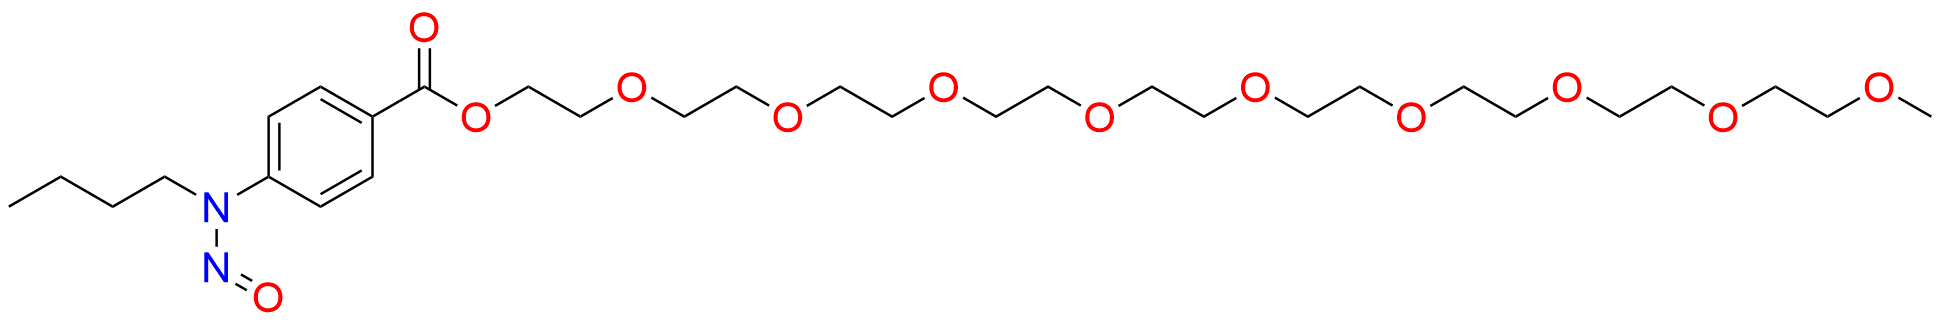 N-Nitroso Benzonatate